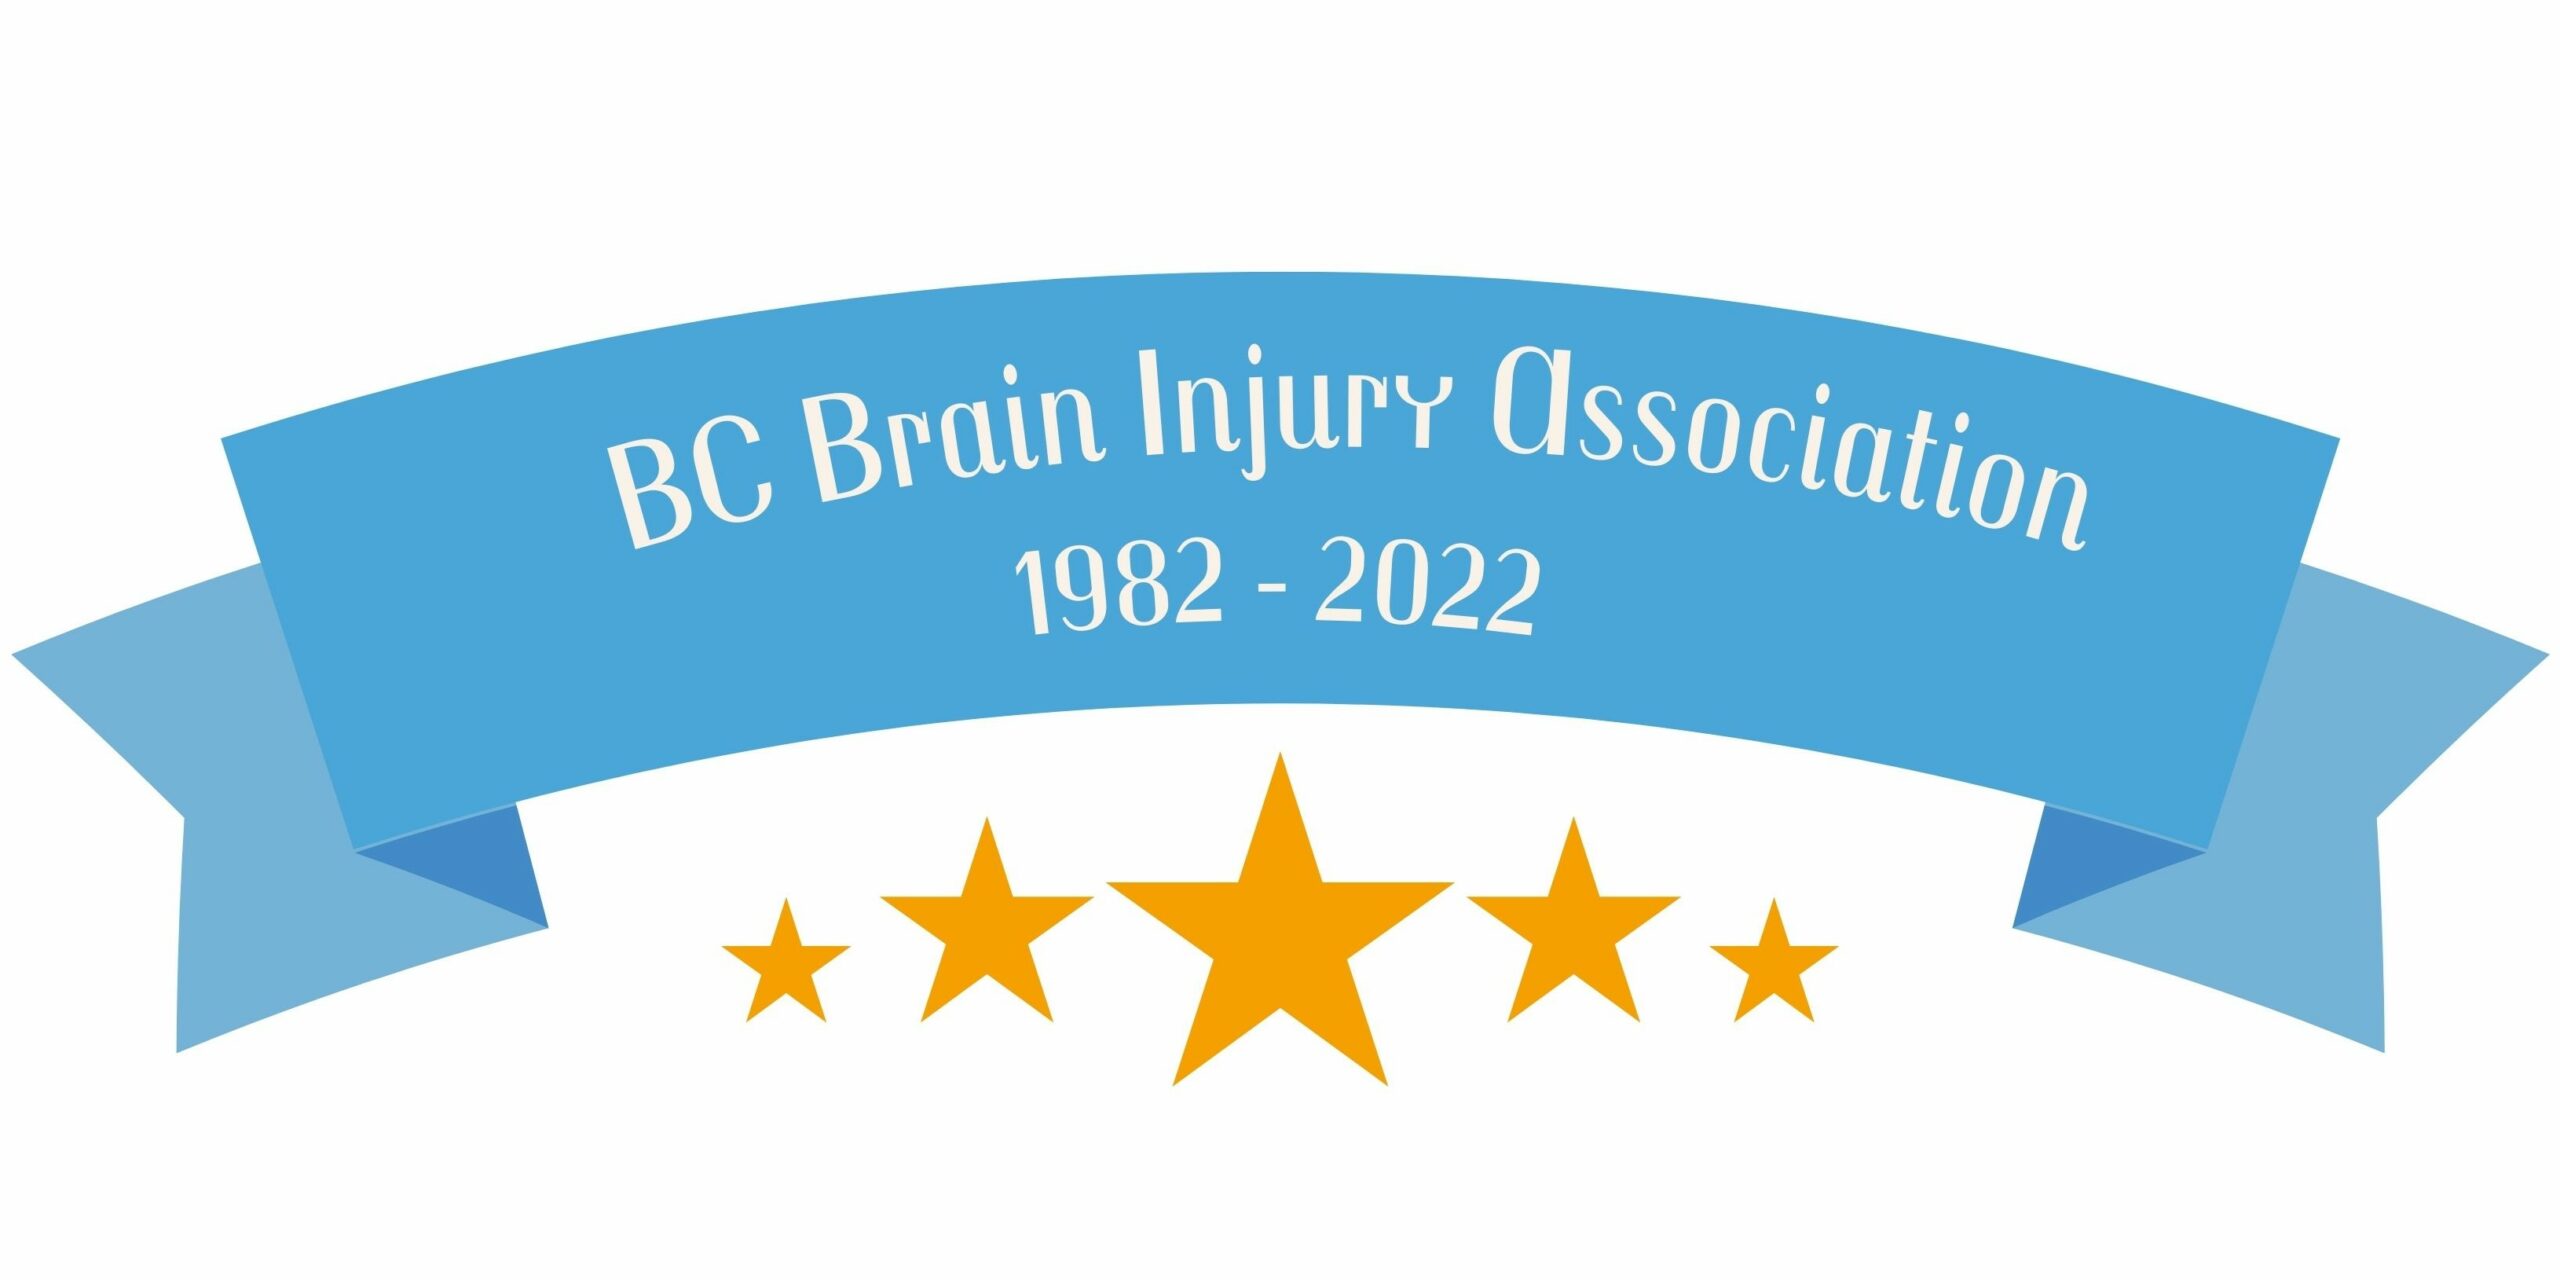 BC Brain Injury Association Celebrates 40 Years of Service